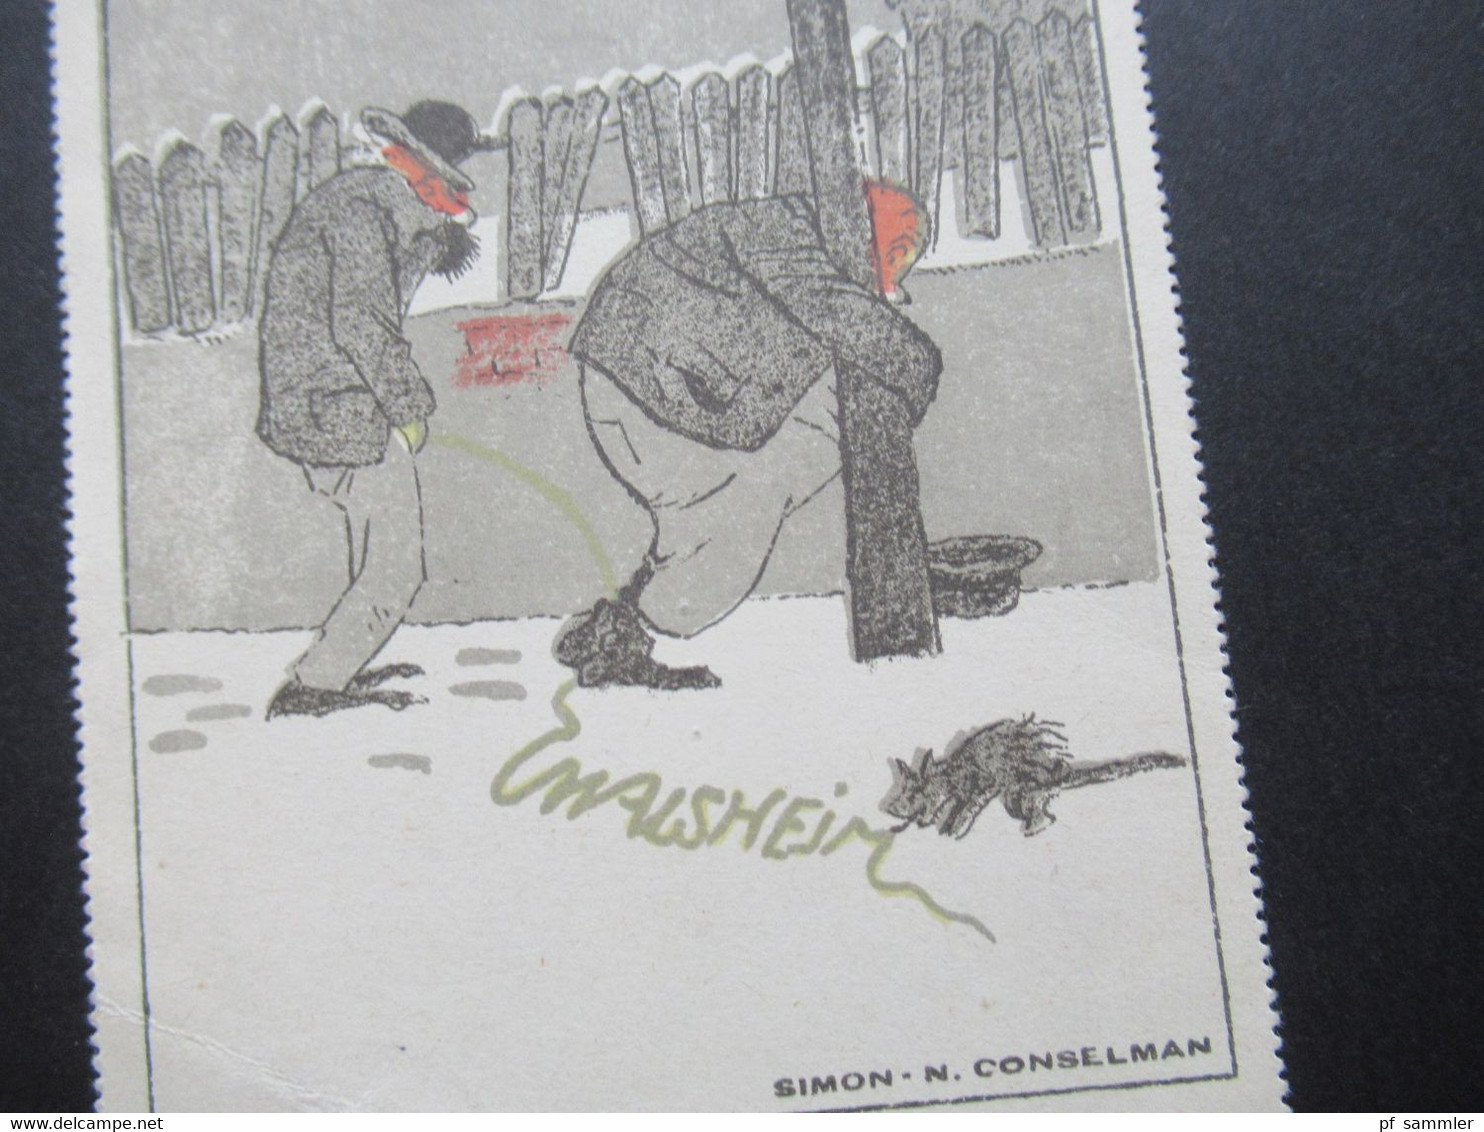 Luxemburg 1920er Jahre Künstlerkarte Karikatur / Spottkarte Souvenir Du Walsheim Simon N. Condelman Editeur Aug. Nimax - 1921-27 Charlotte Voorzijde